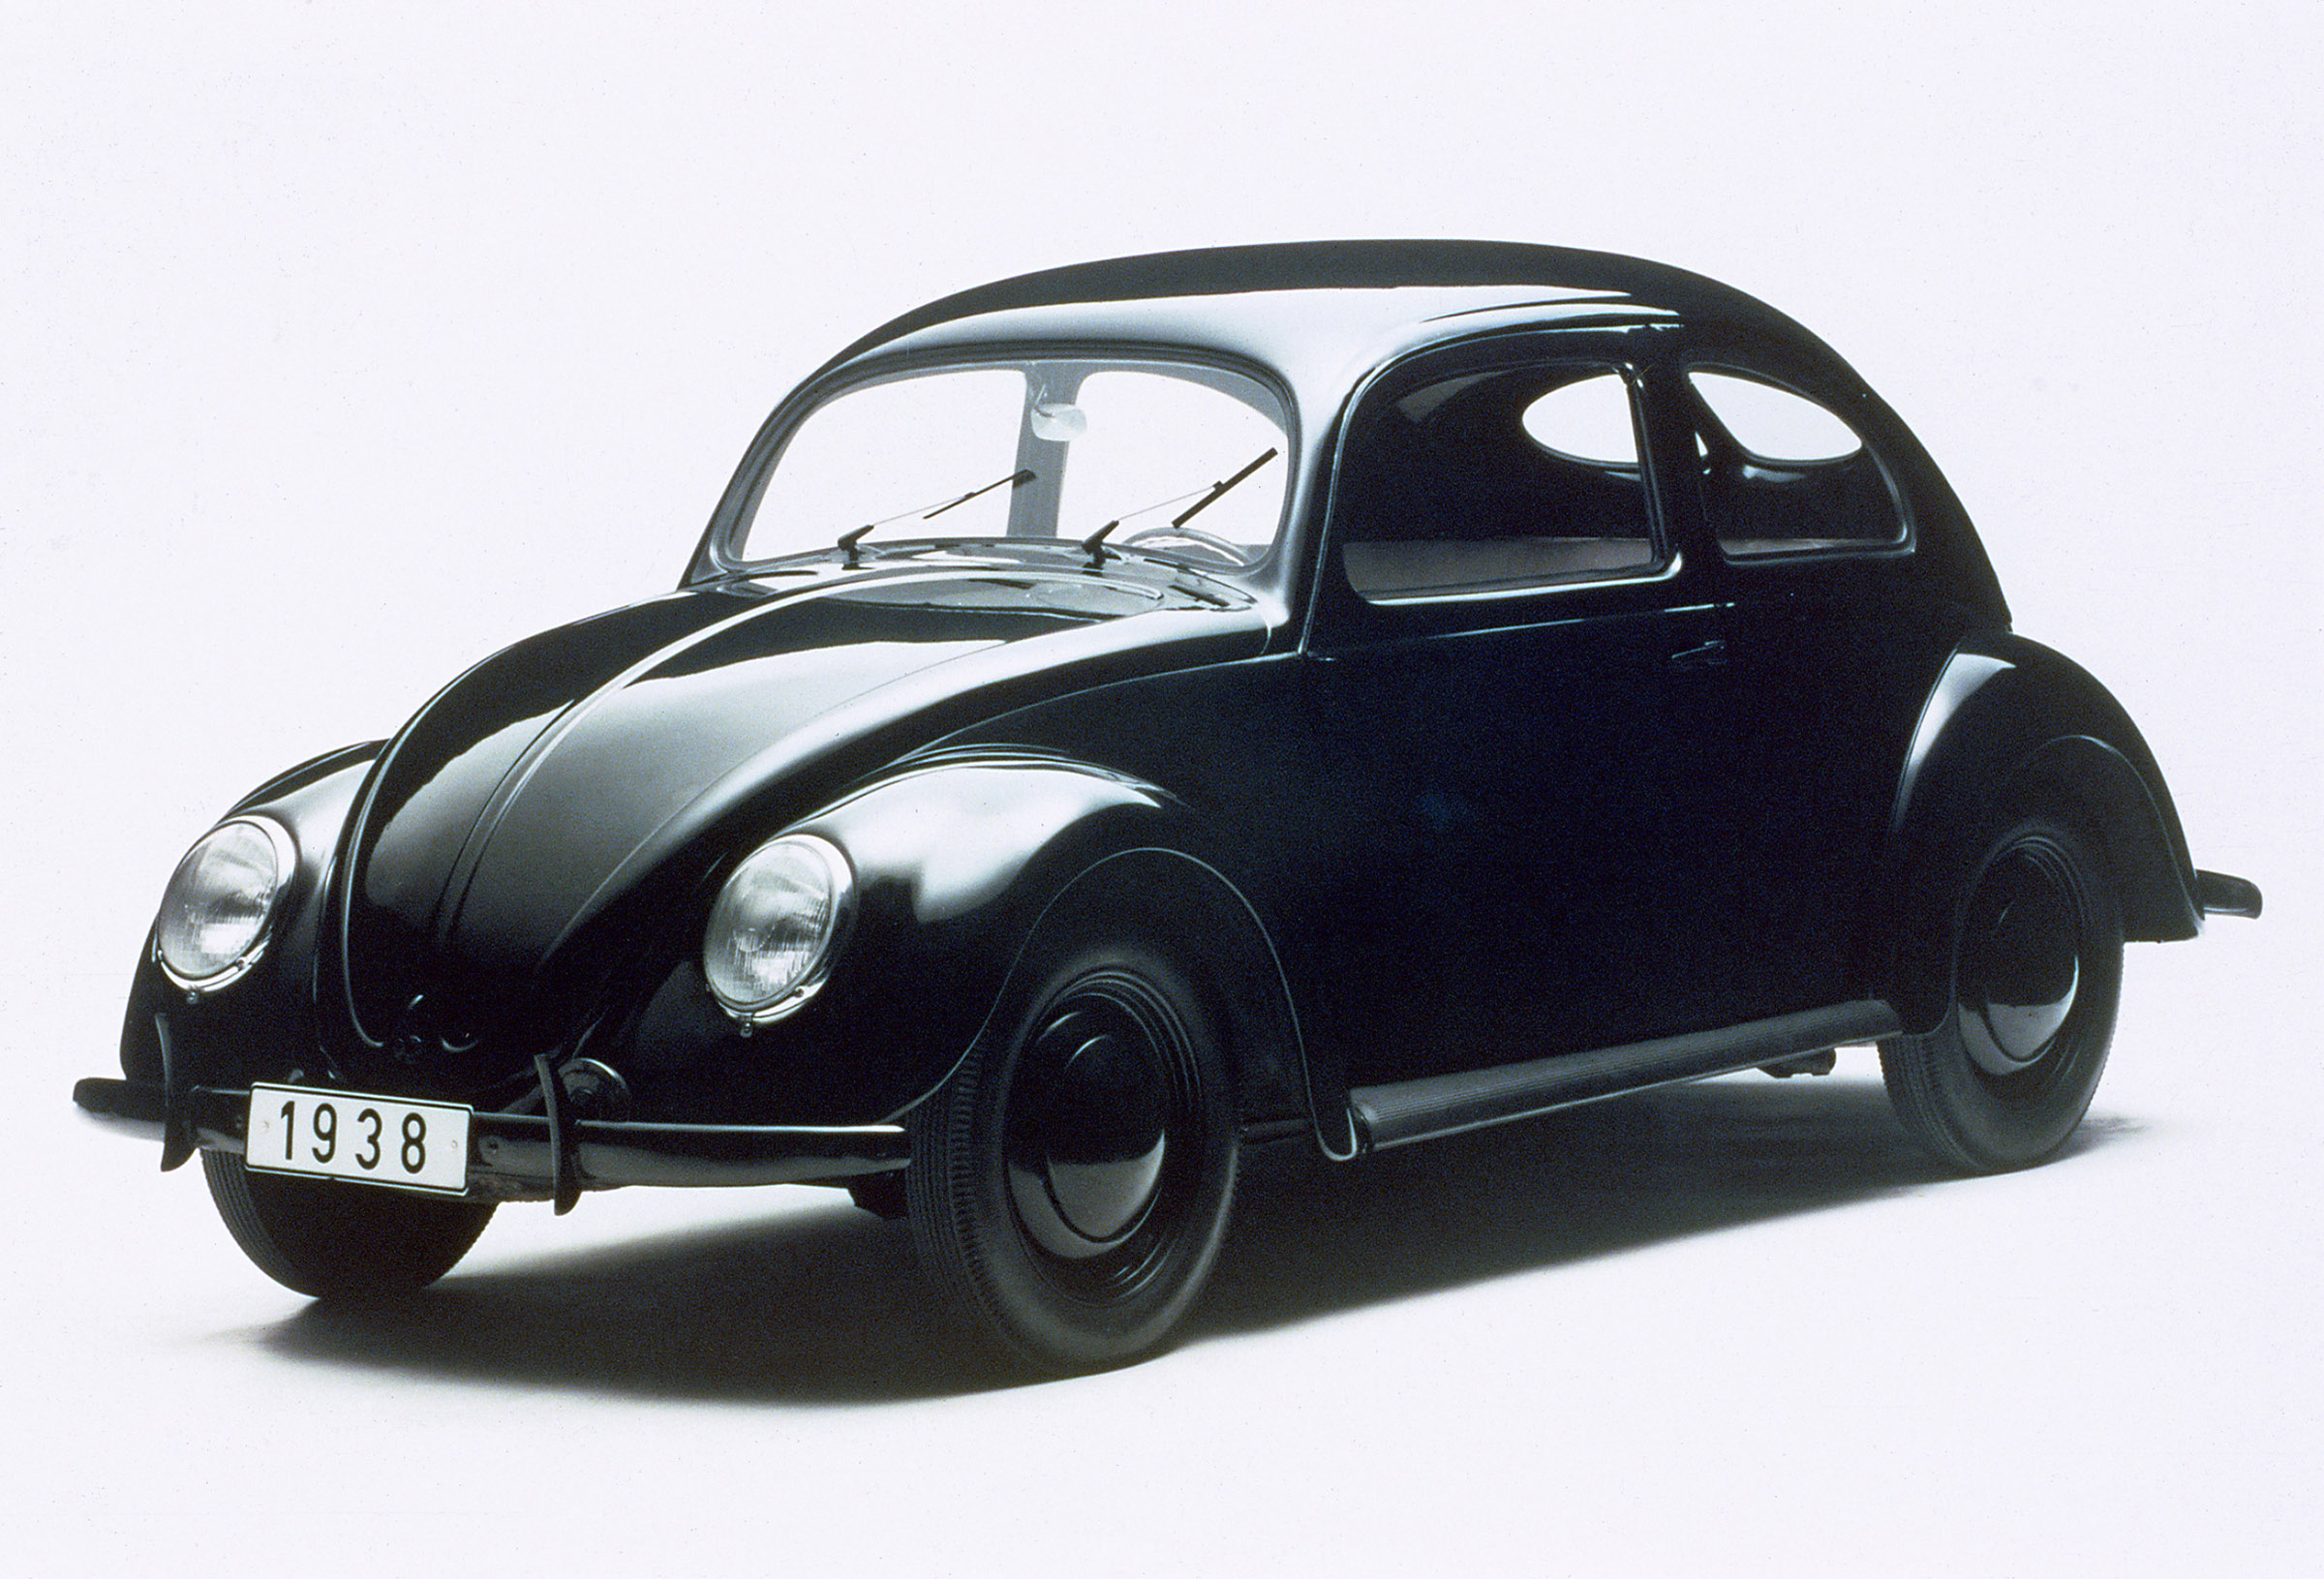 VW Original Beetle